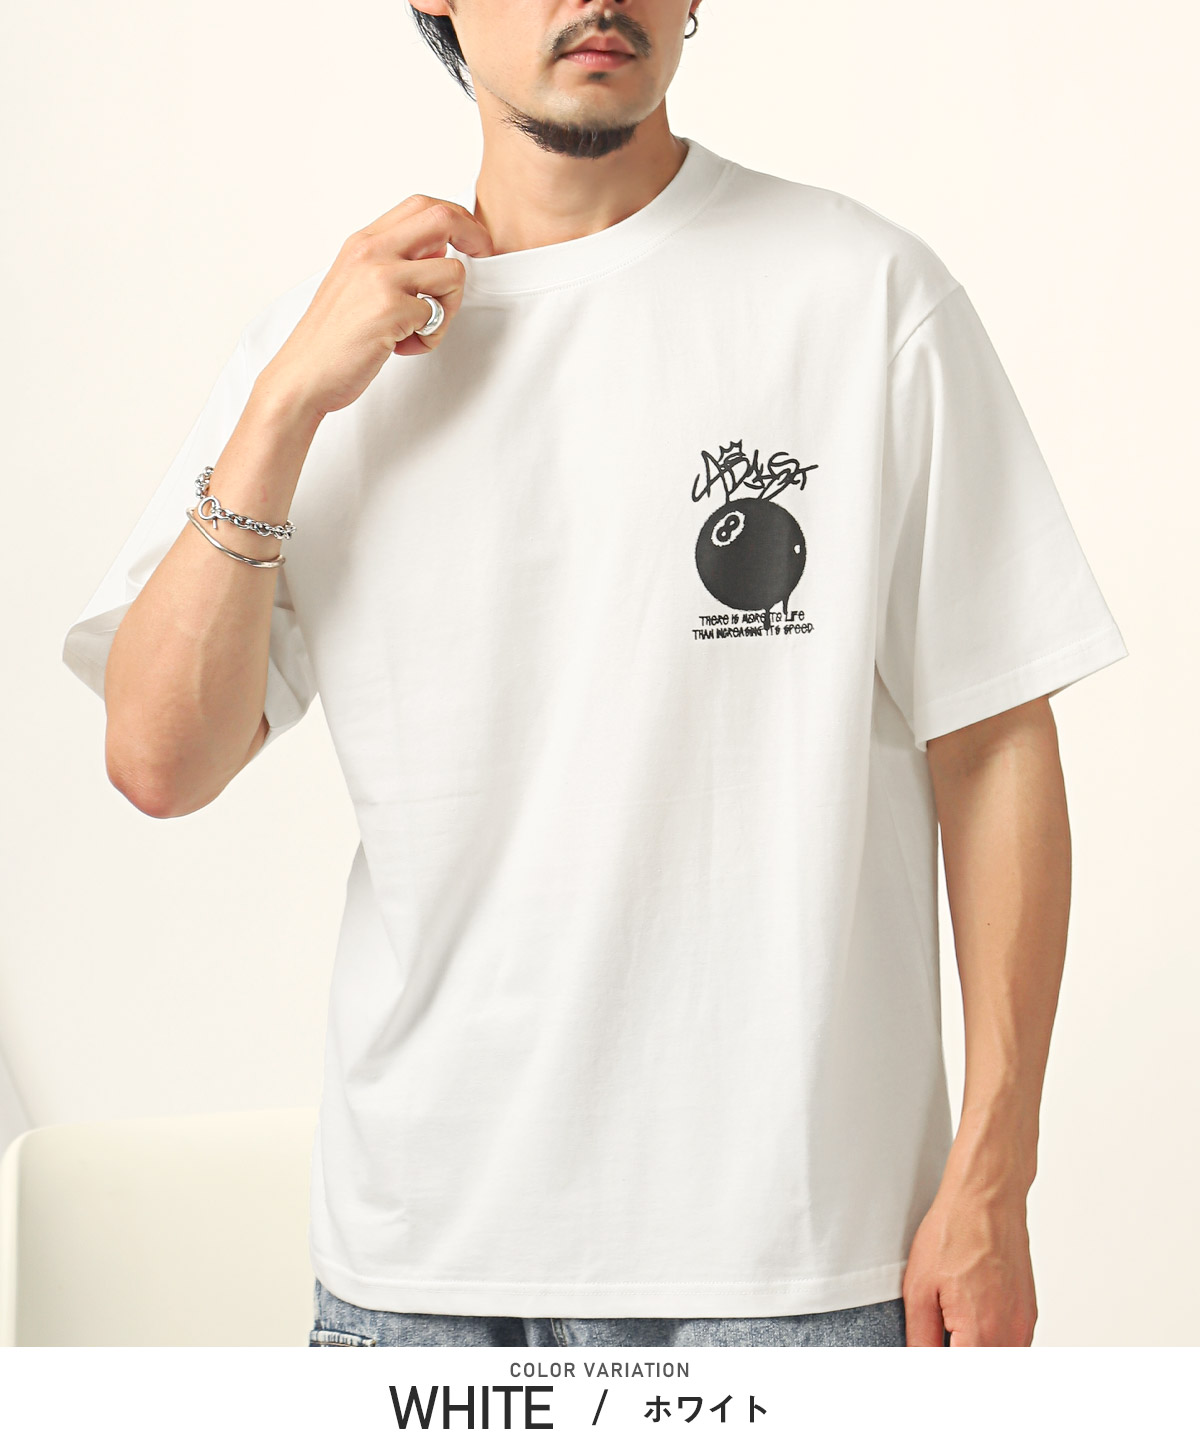 Tシャツ 半袖 メンズ レディース 落書き風 プリント ビリヤード グラフィティ ストリート 韓国